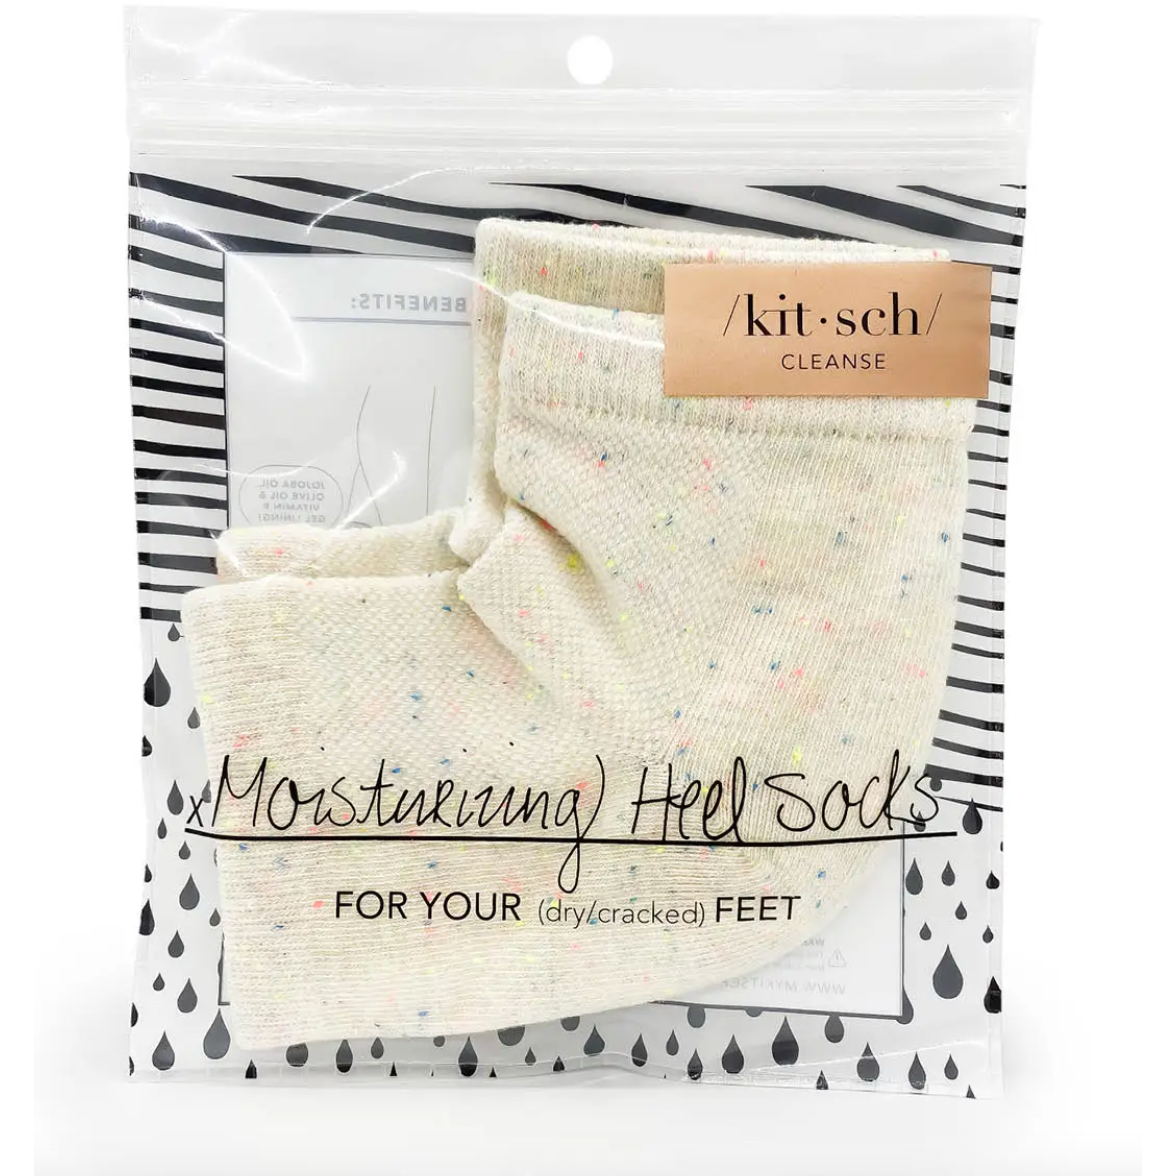 Moisturizing Heel Socks by Kitsch